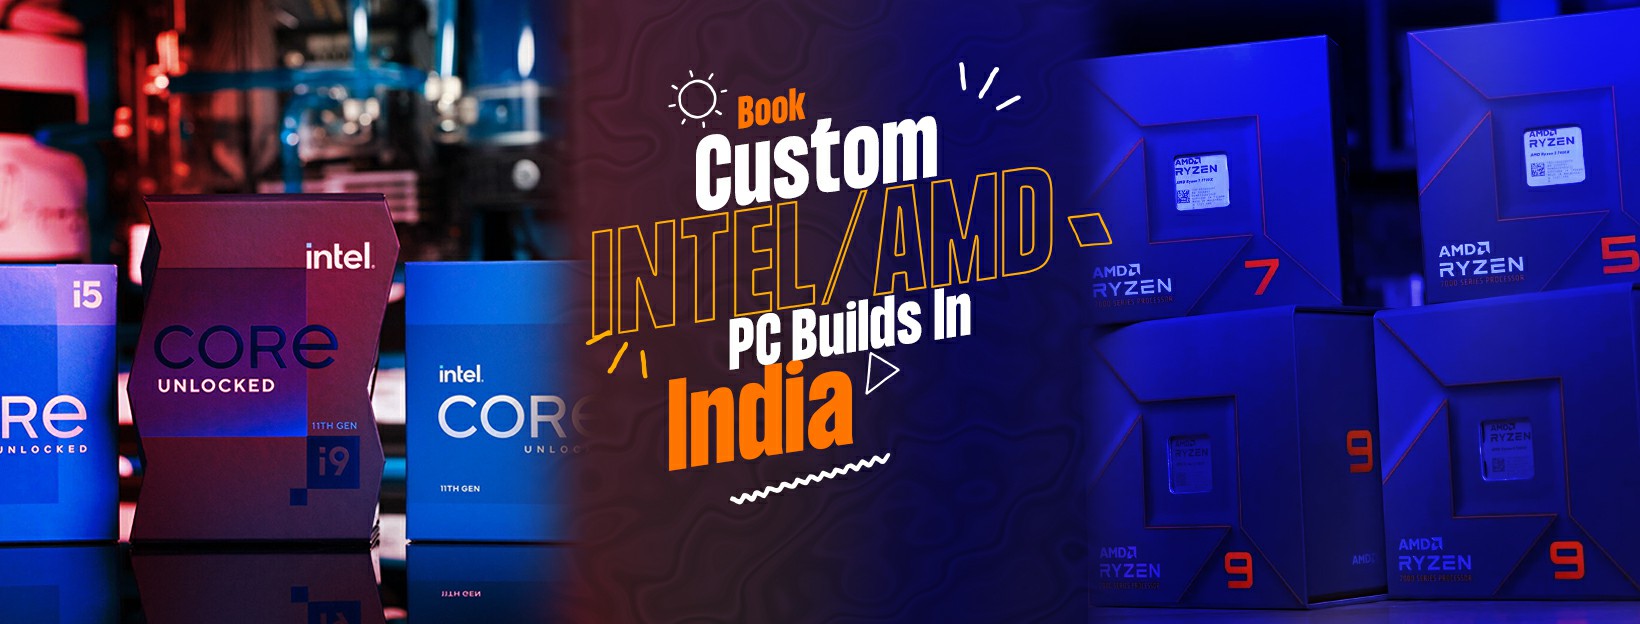 intel or amd custom pc build in india